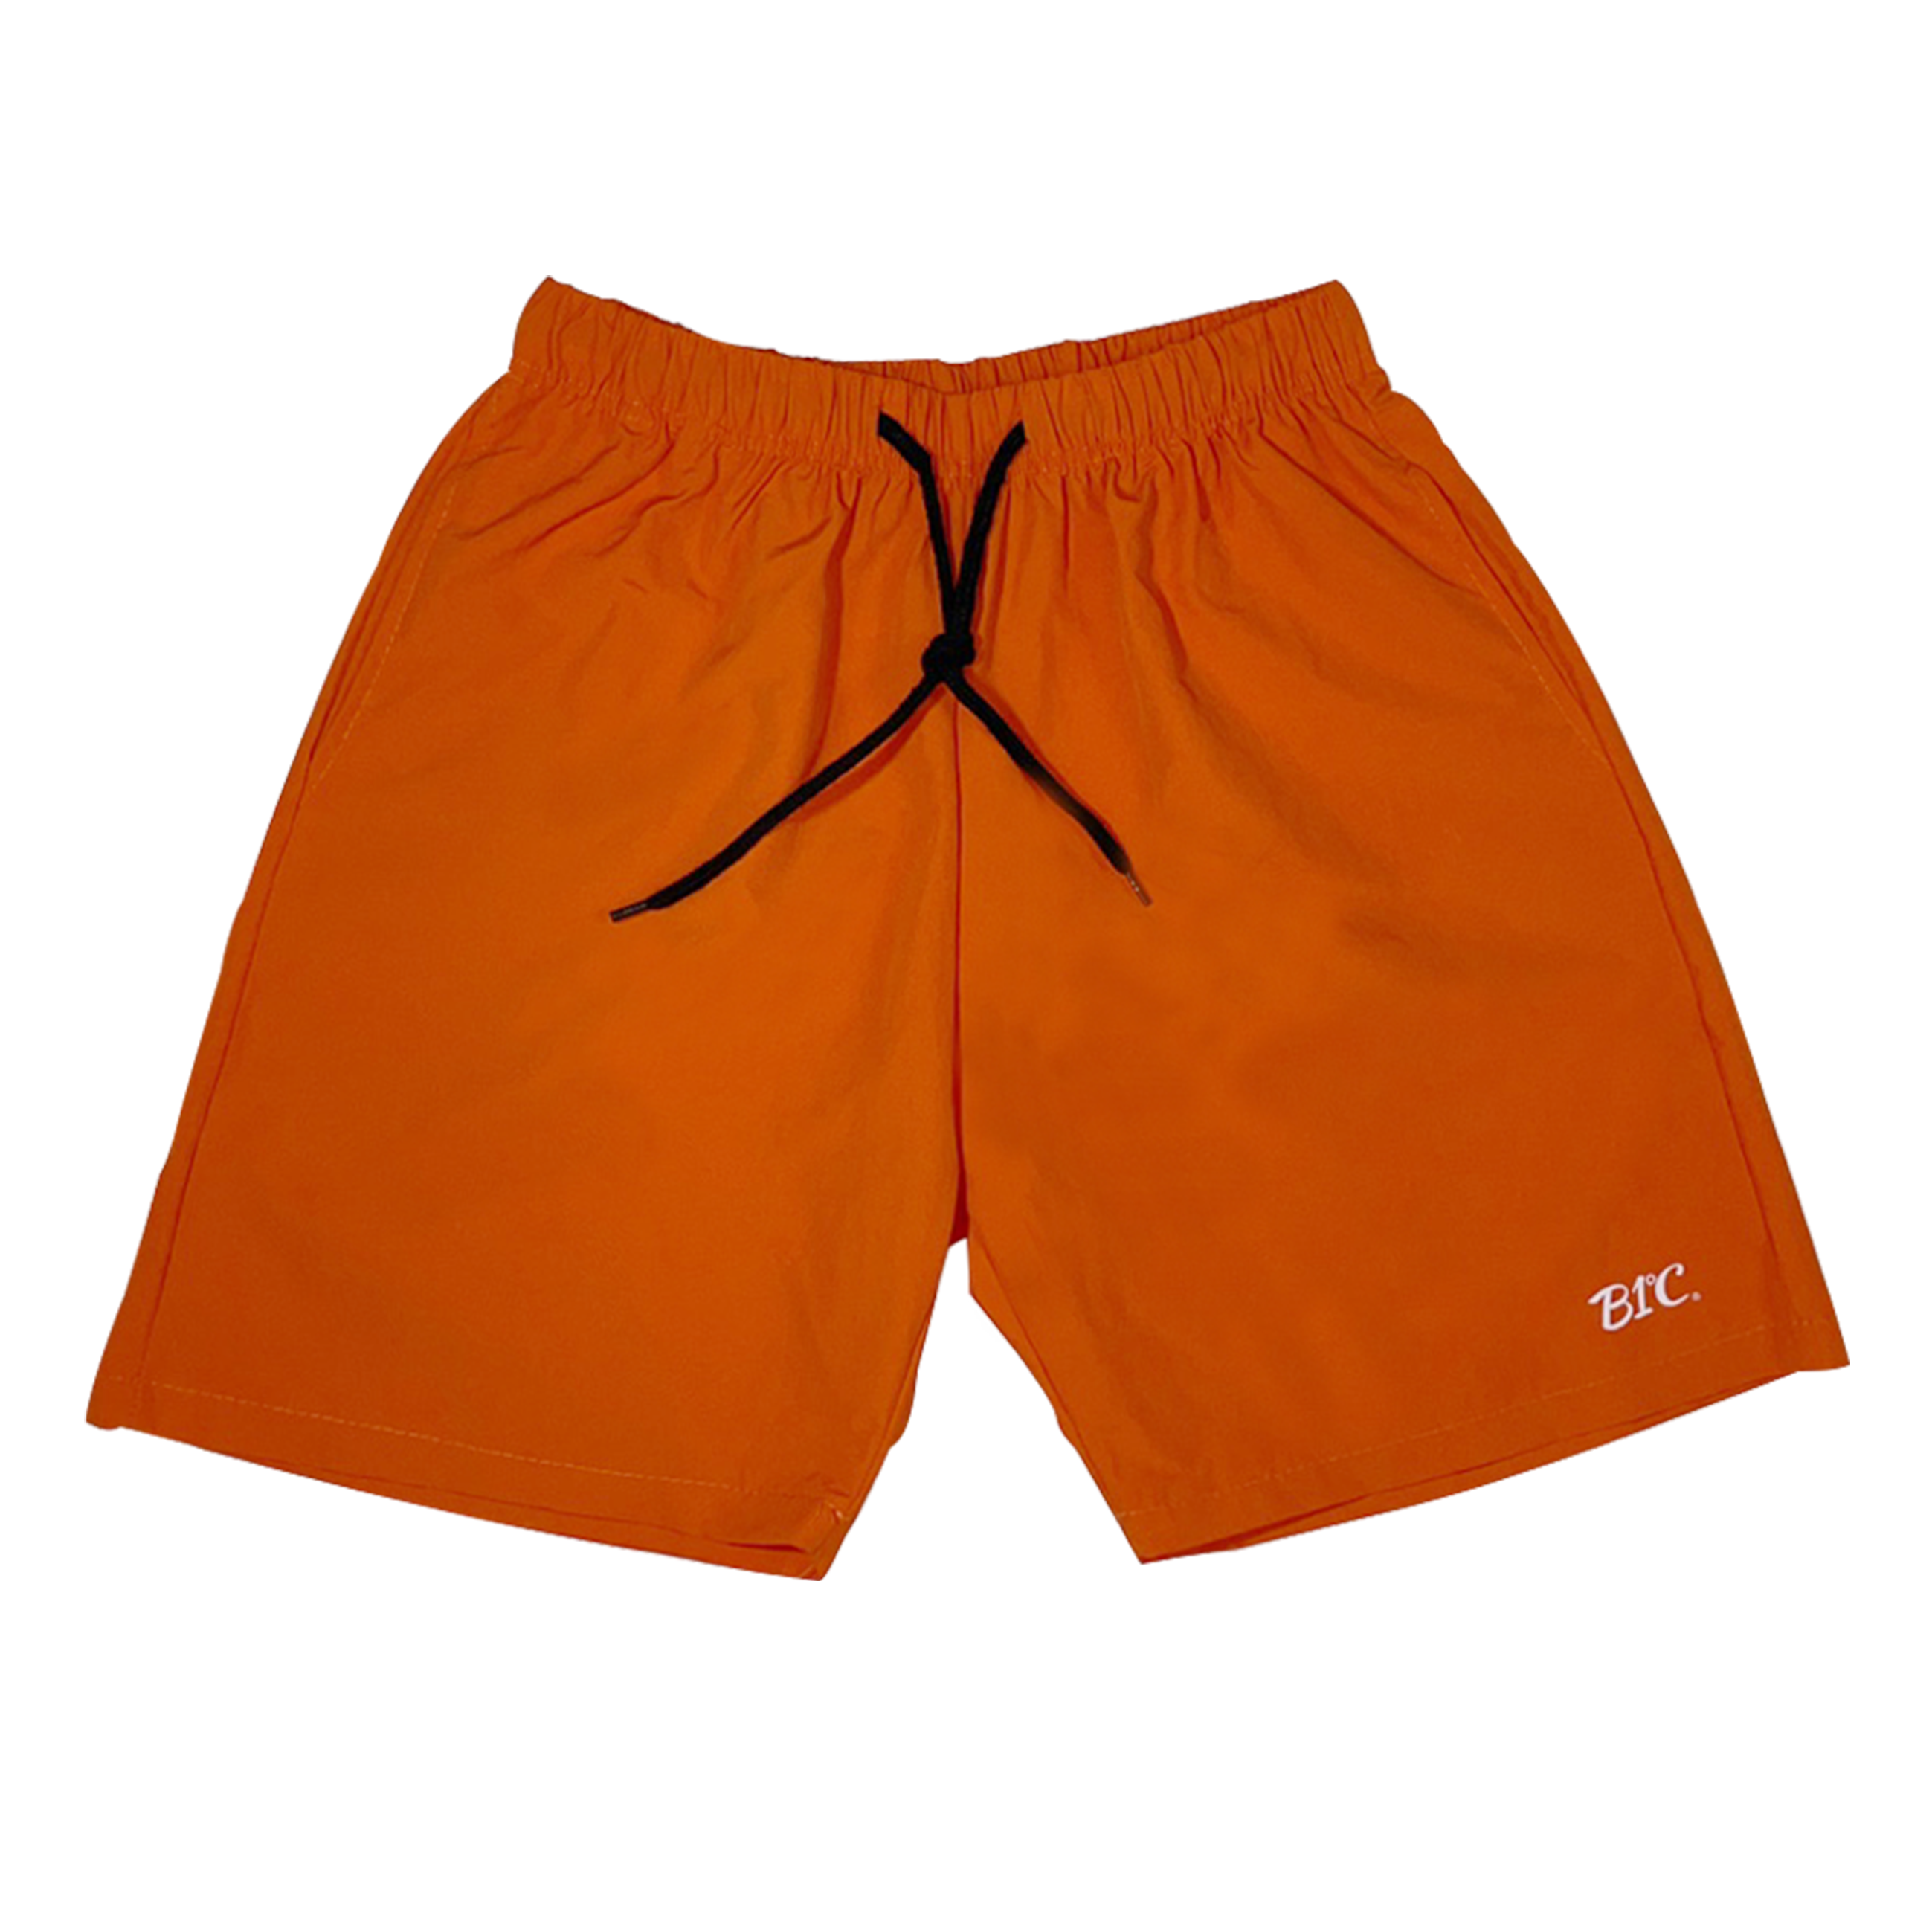 B1℃(B one do C) Signature Orange Anorak Short Pants